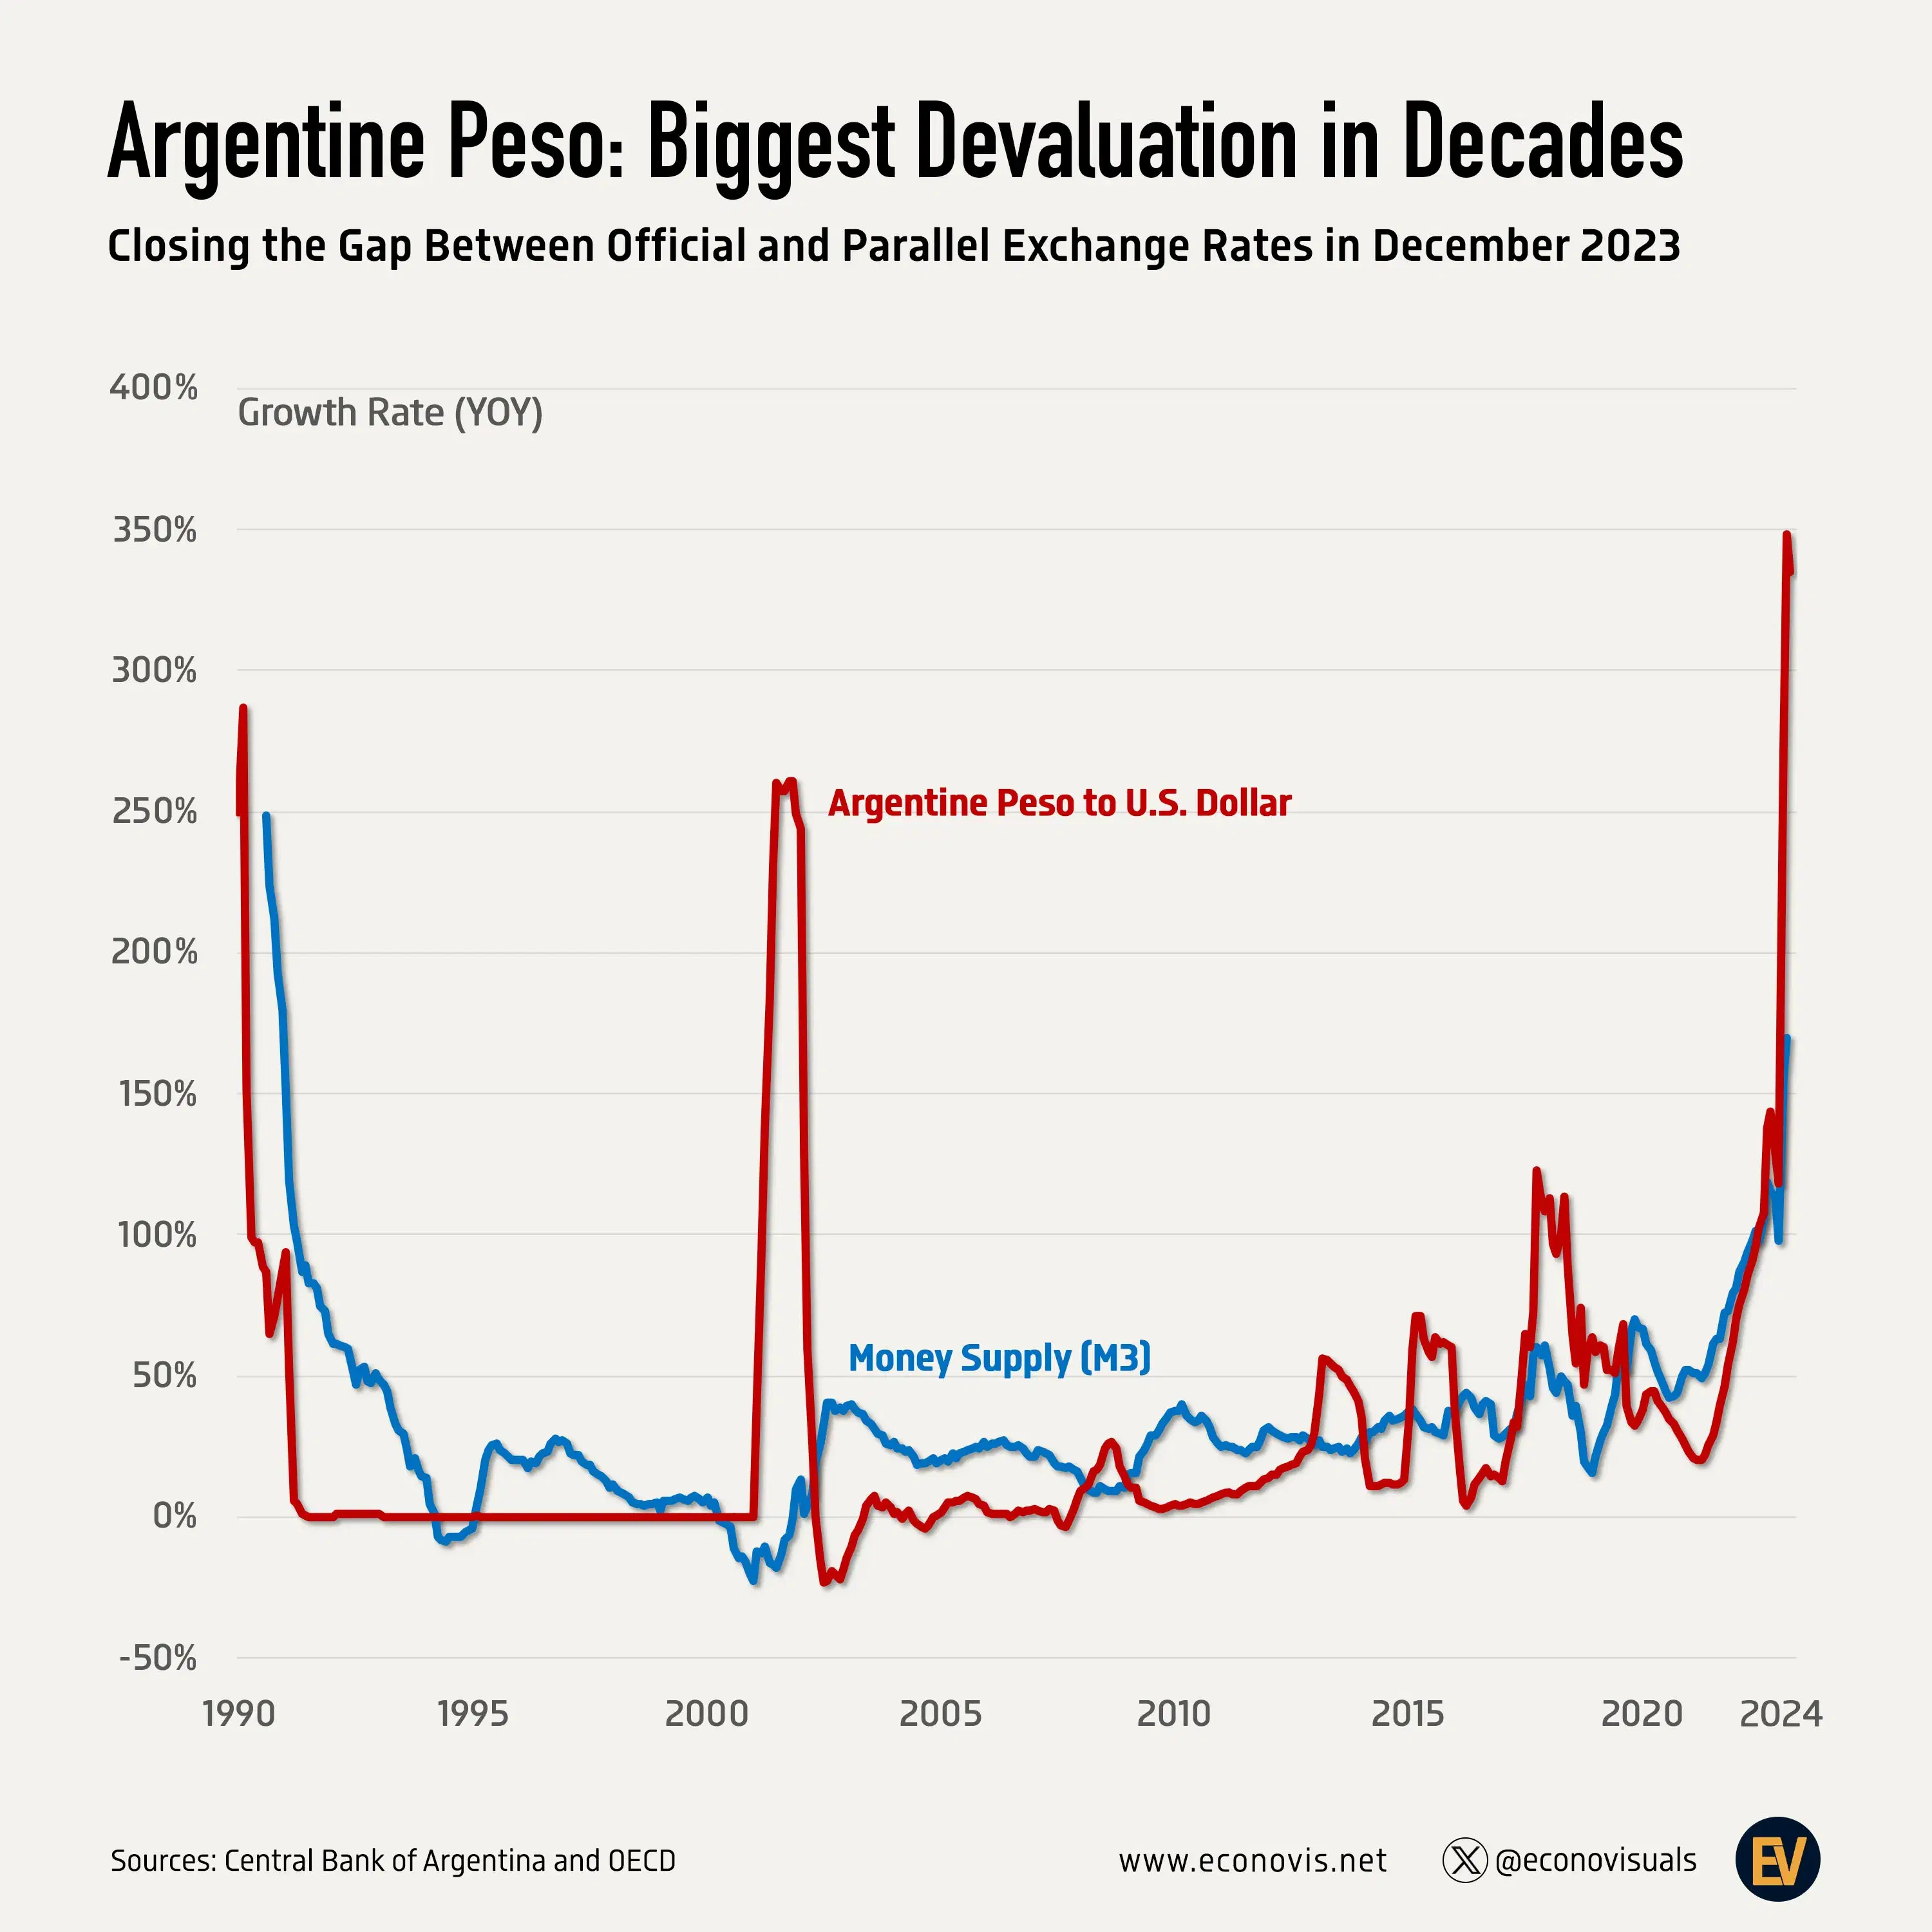 Argentine Peso: Biggest Devaluation in Decades